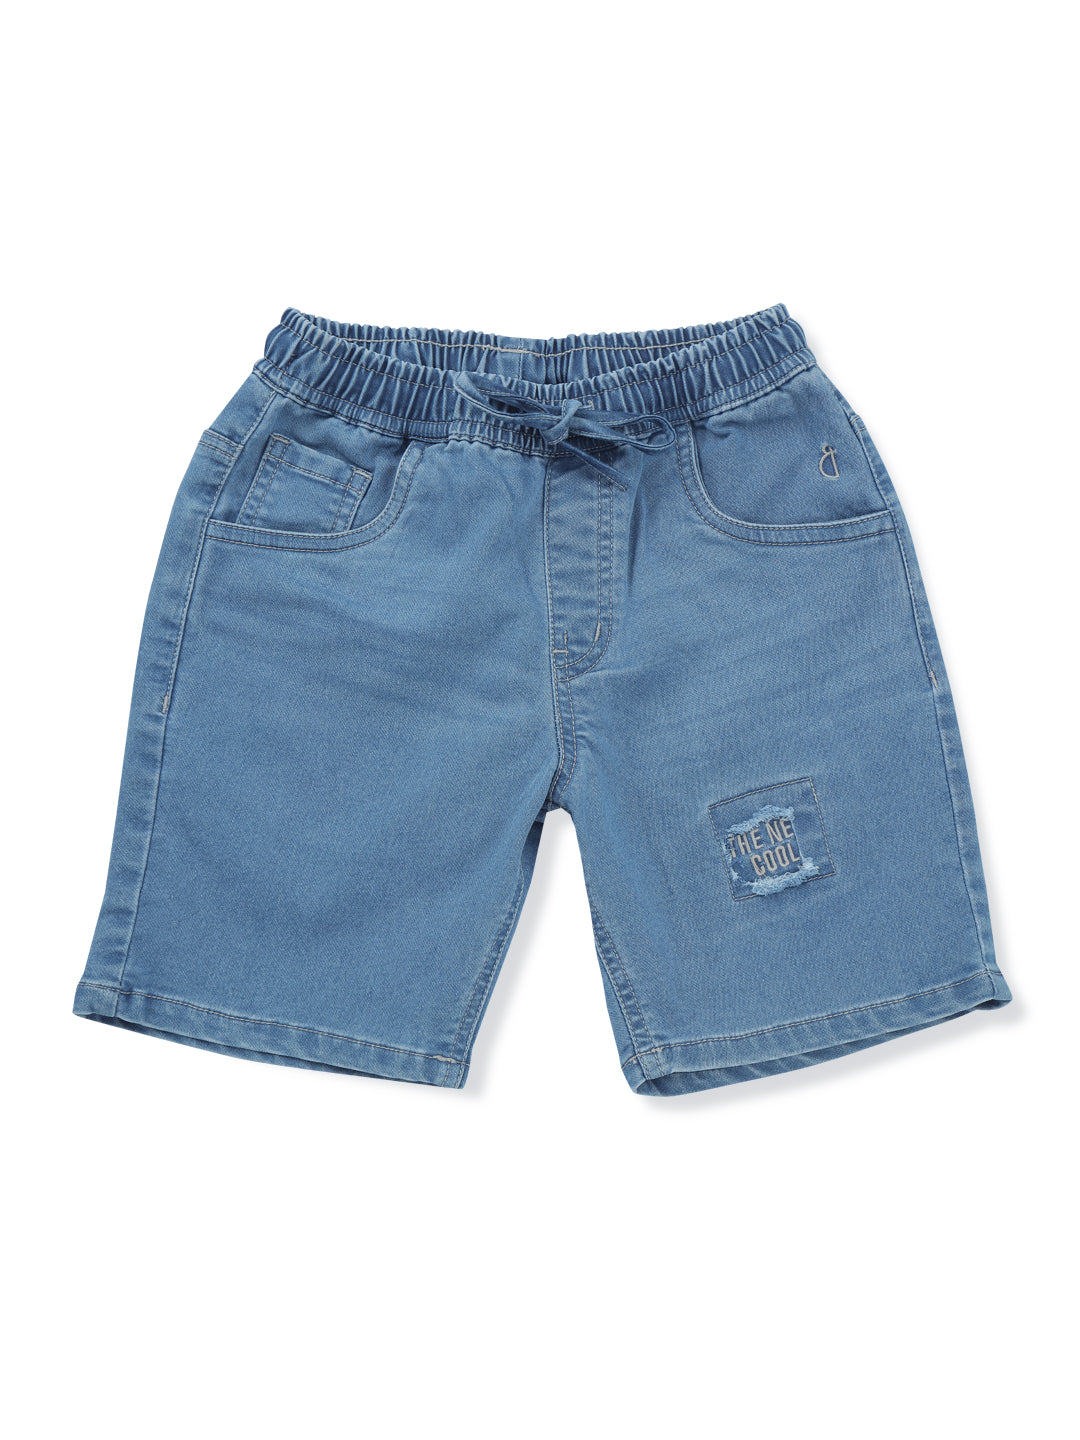 Boys Blue Cotton Denim Solid Shorts